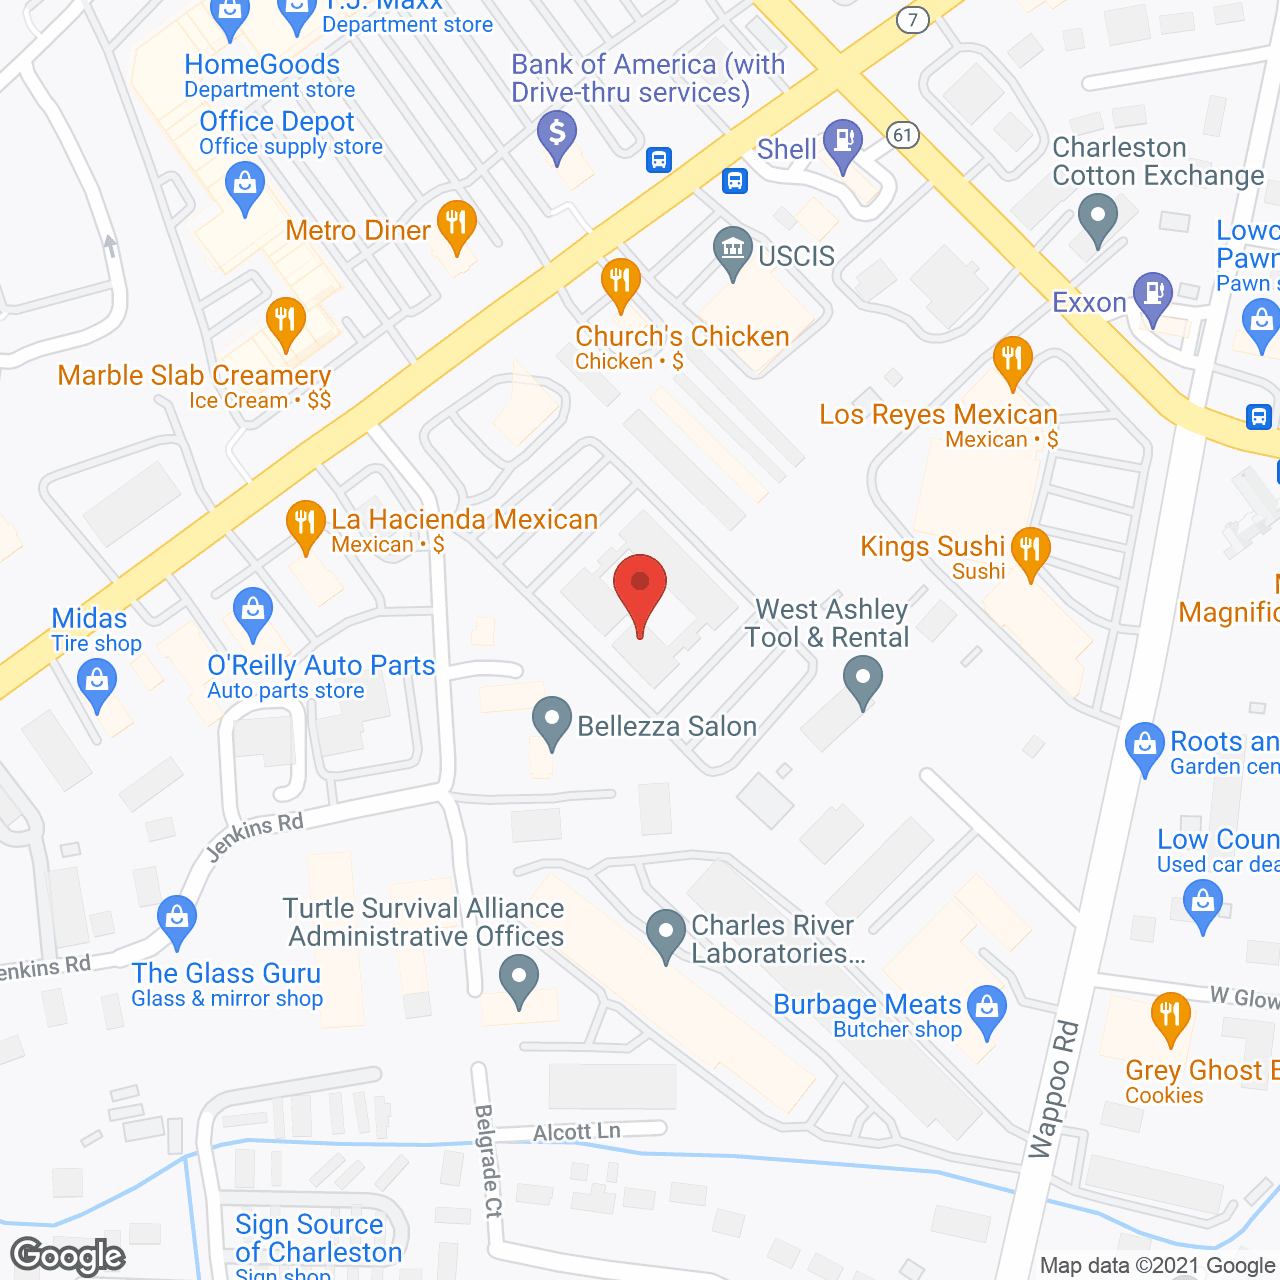 BrightStar of Charleston in google map